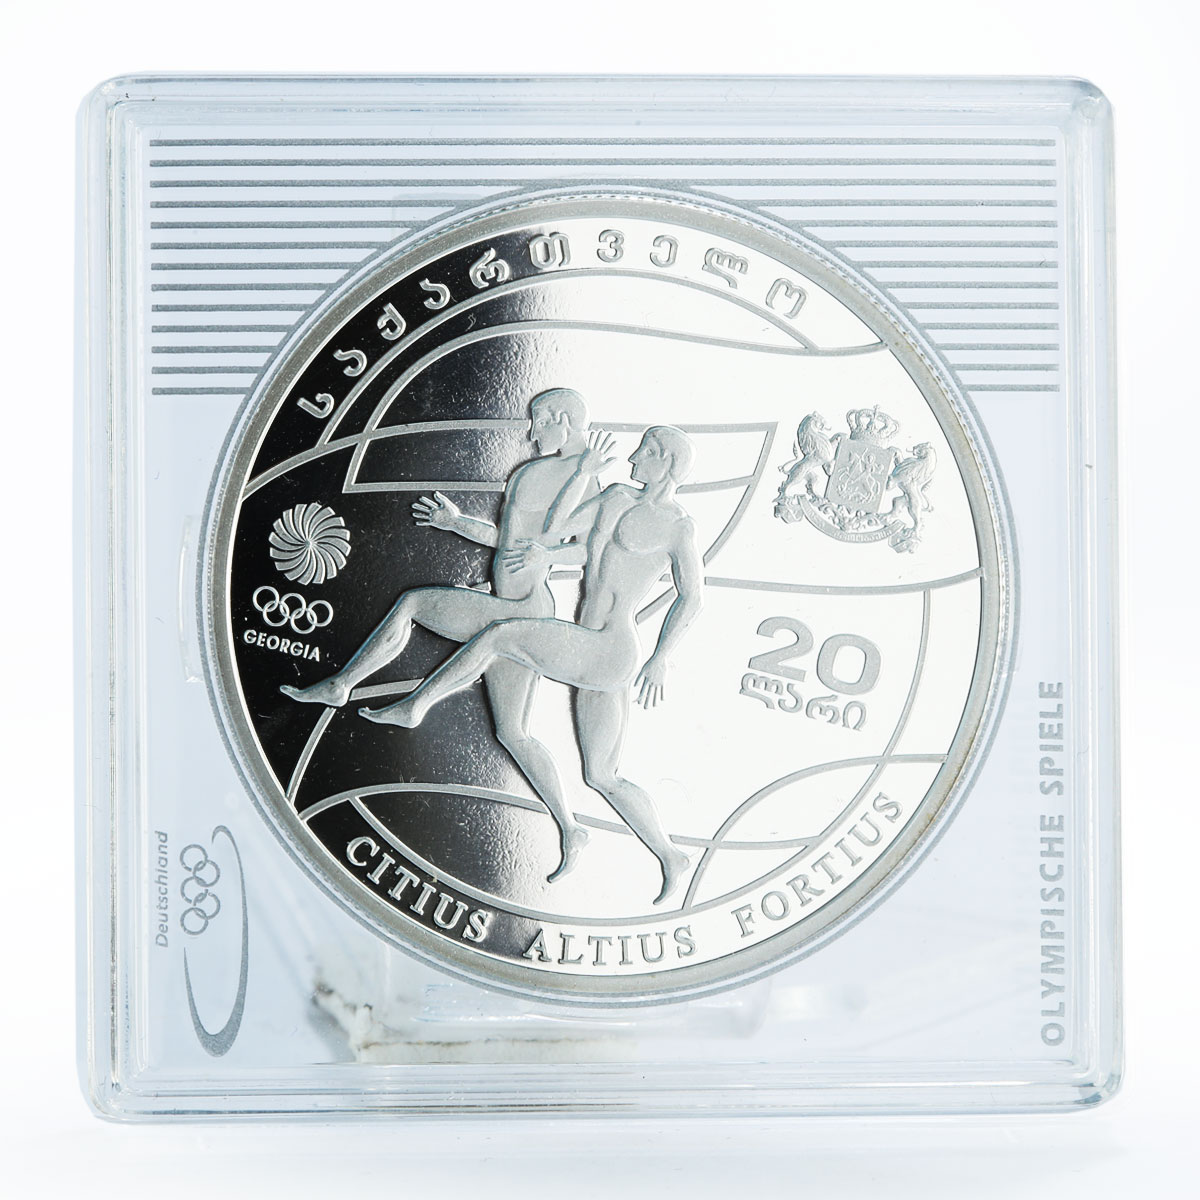 Georgia 20 lari Beijing Olympic Games series Runners proof silver coin 2008